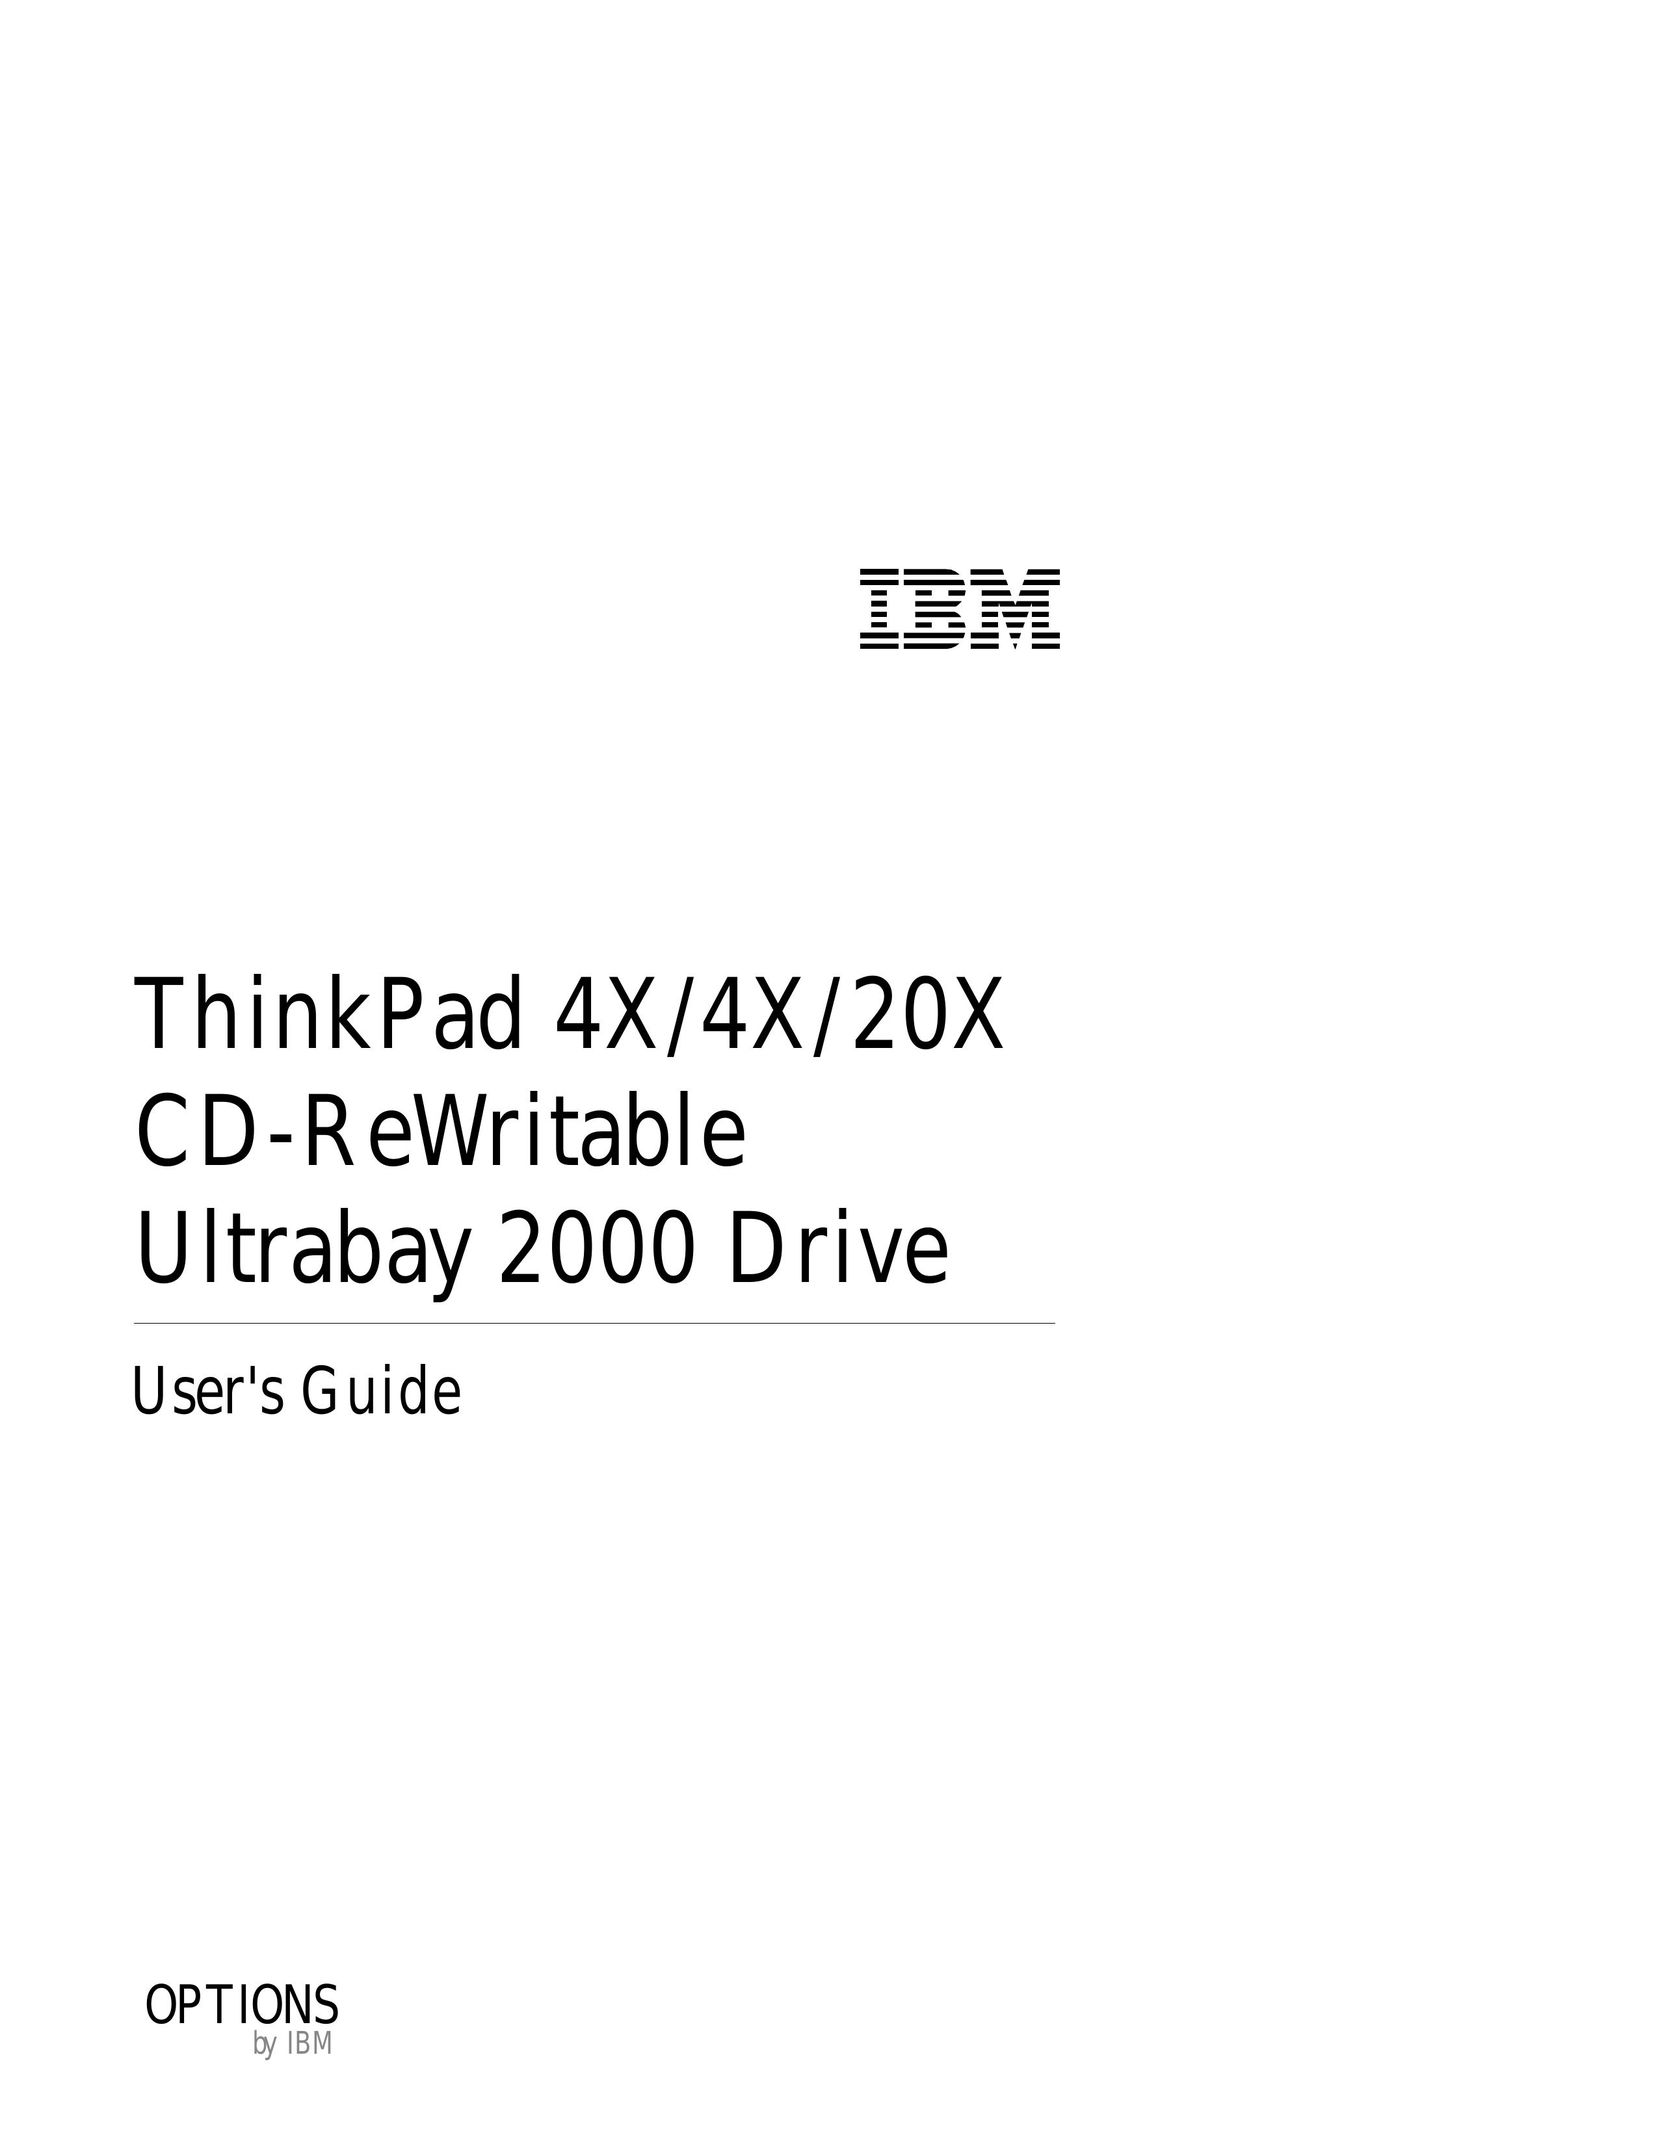 IBM 20X Computer Drive User Manual